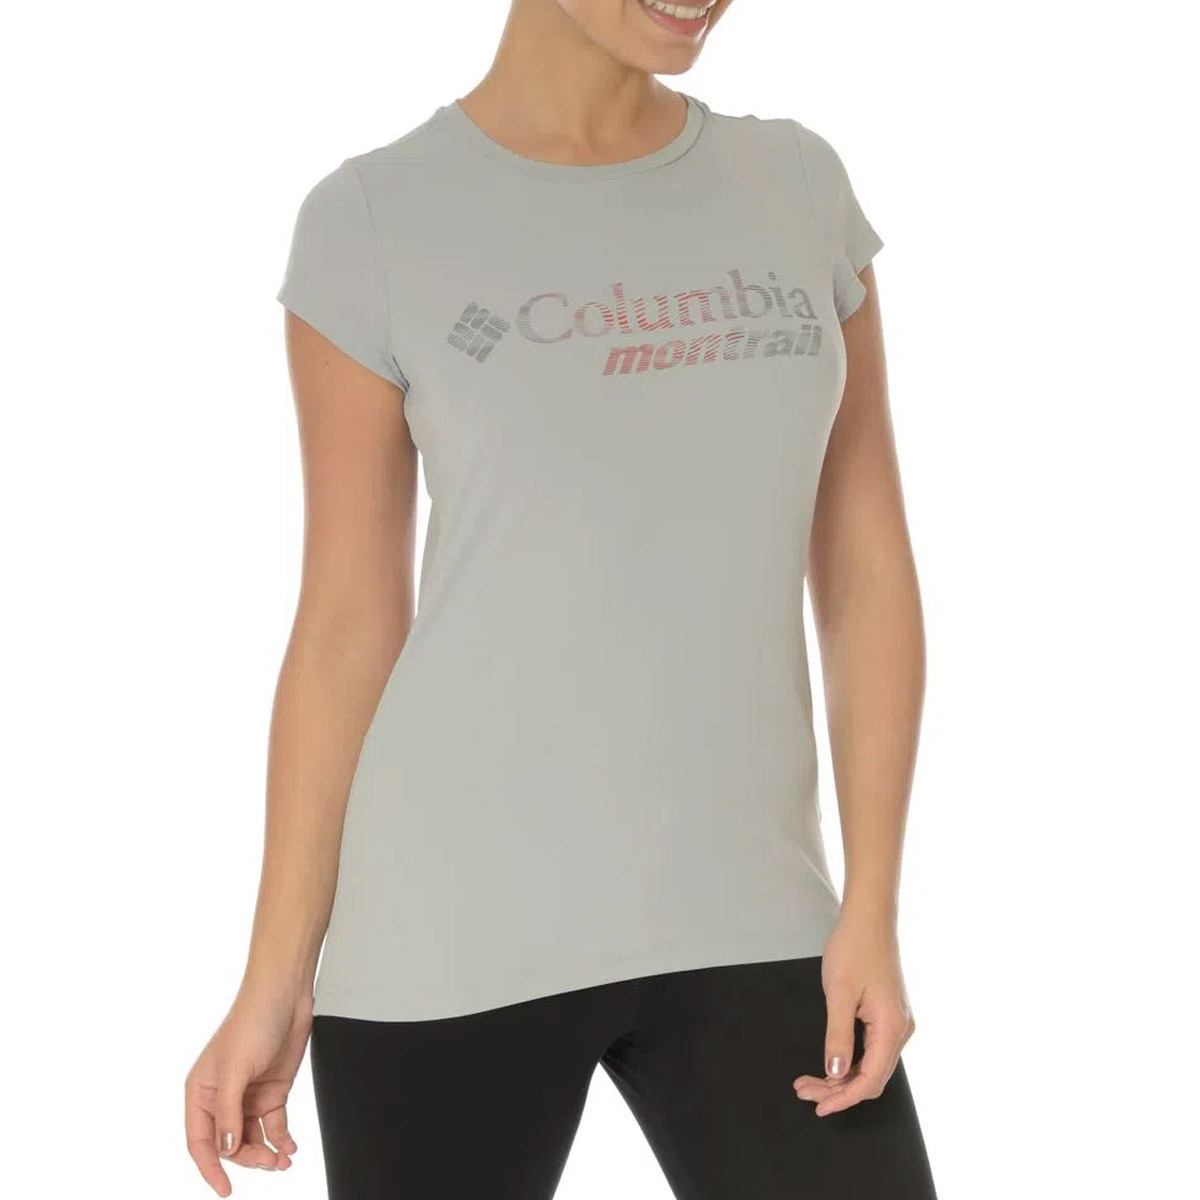 Camiseta Columbia Feminina Neblina Montrail Manga Curta Sport White